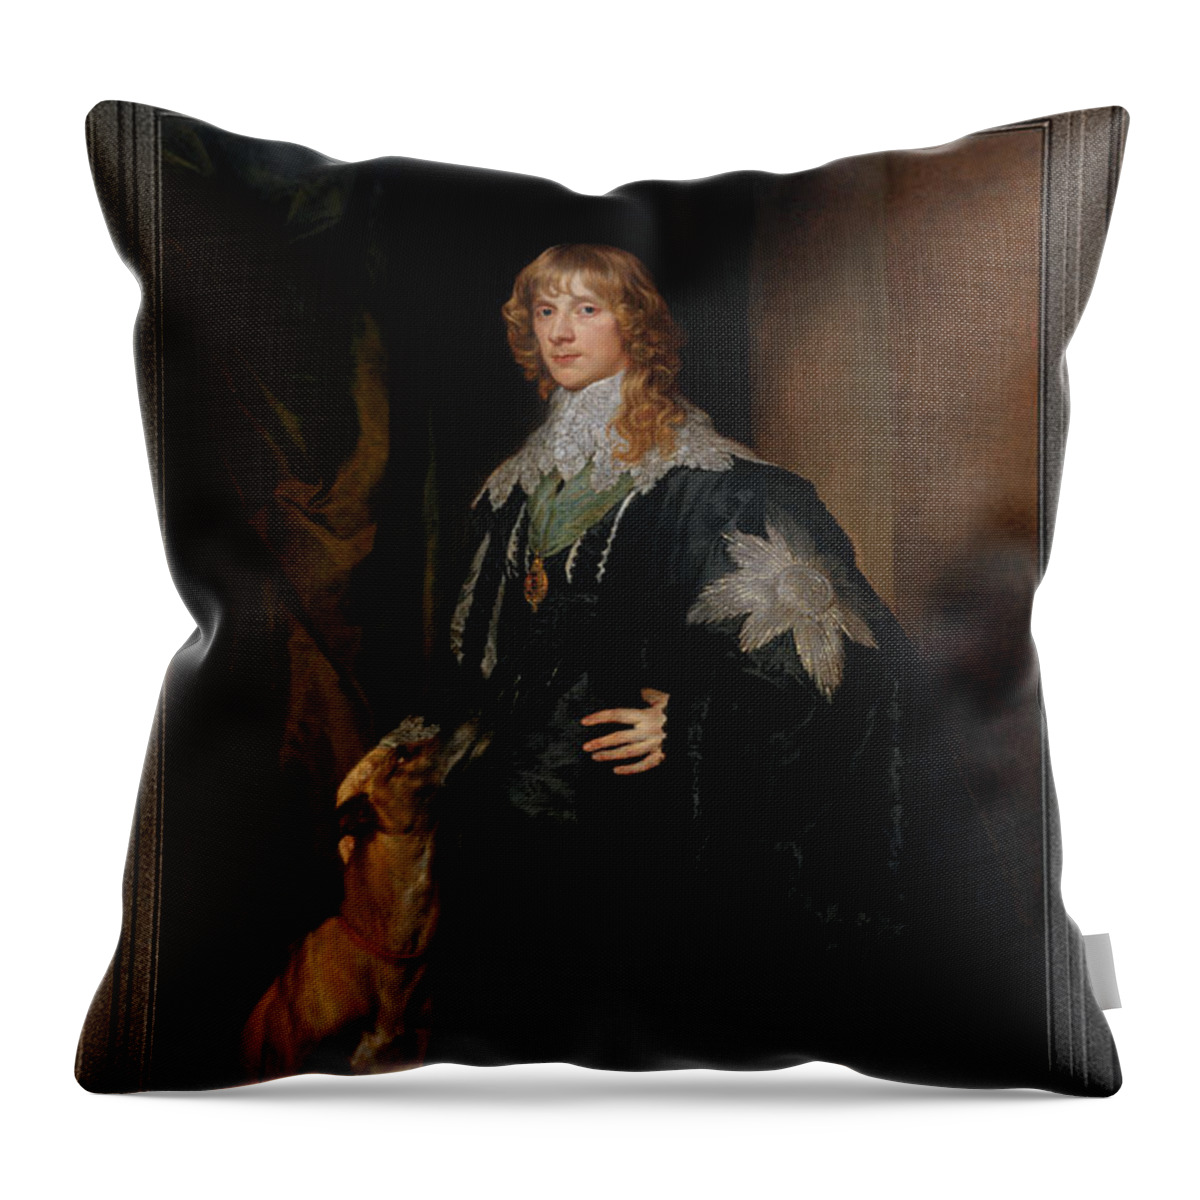 Portrait Of James Stuart Throw Pillow featuring the painting Portrait of James Stuart Duke of Richmond and Lenox by Anthony van Dyck by Rolando Burbon